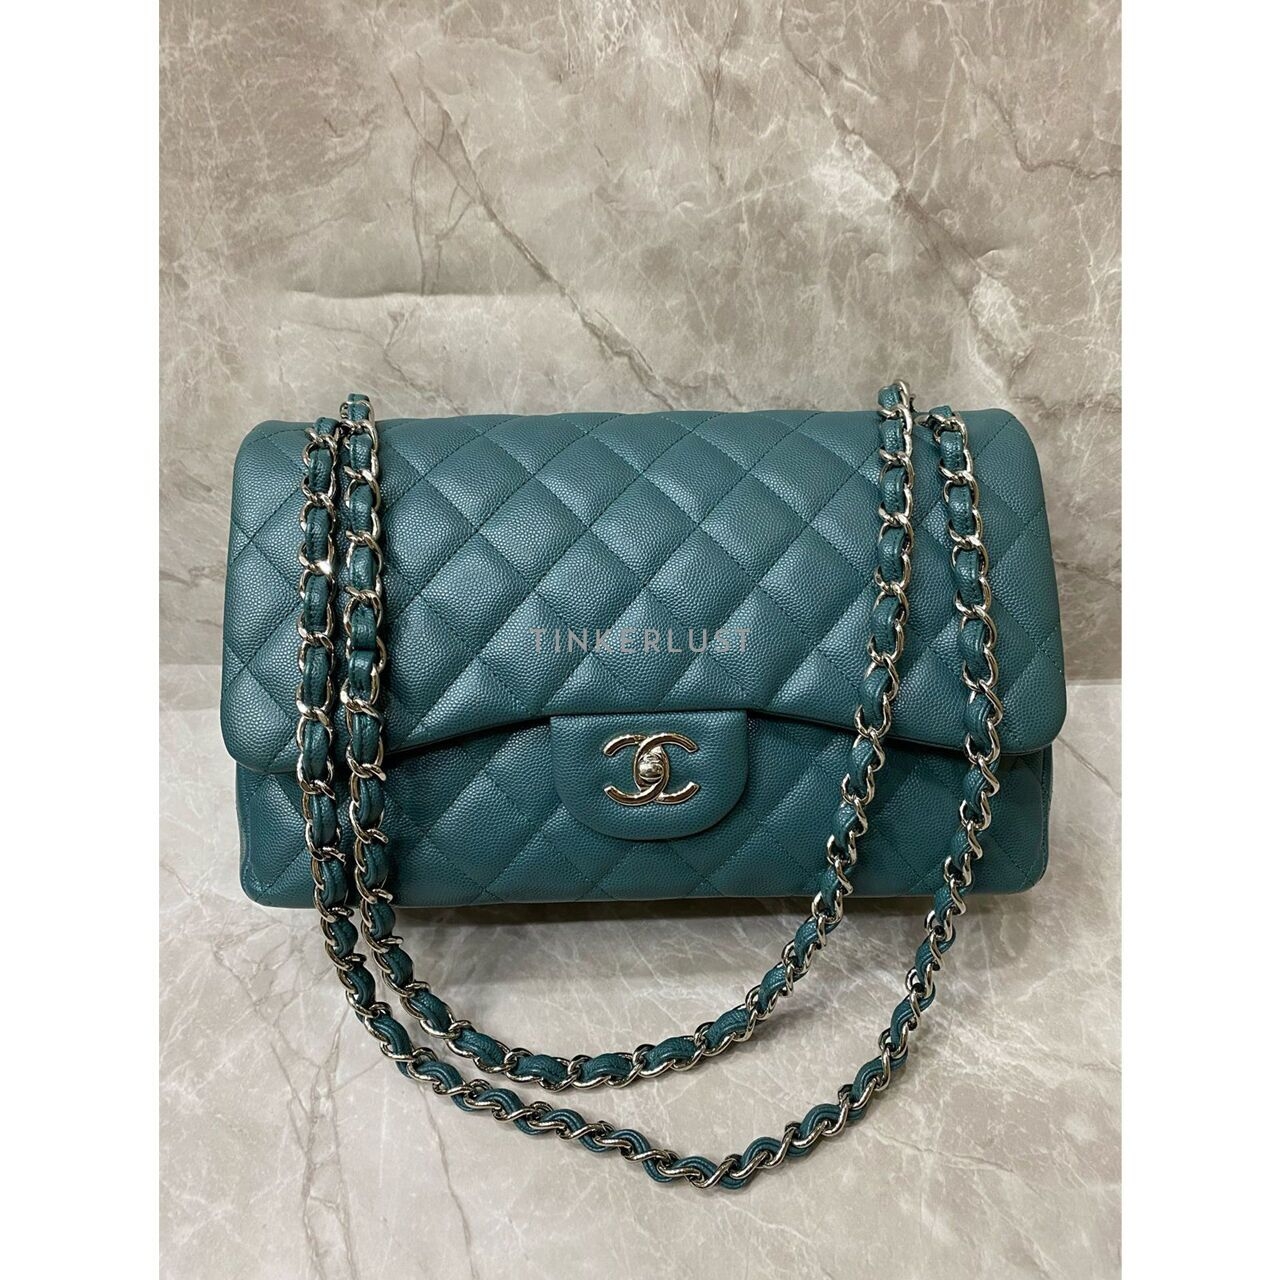 Chanel Classic Jumbo Double Flap Blue Turquoise Caviar #24 SHW Shoulder Bag